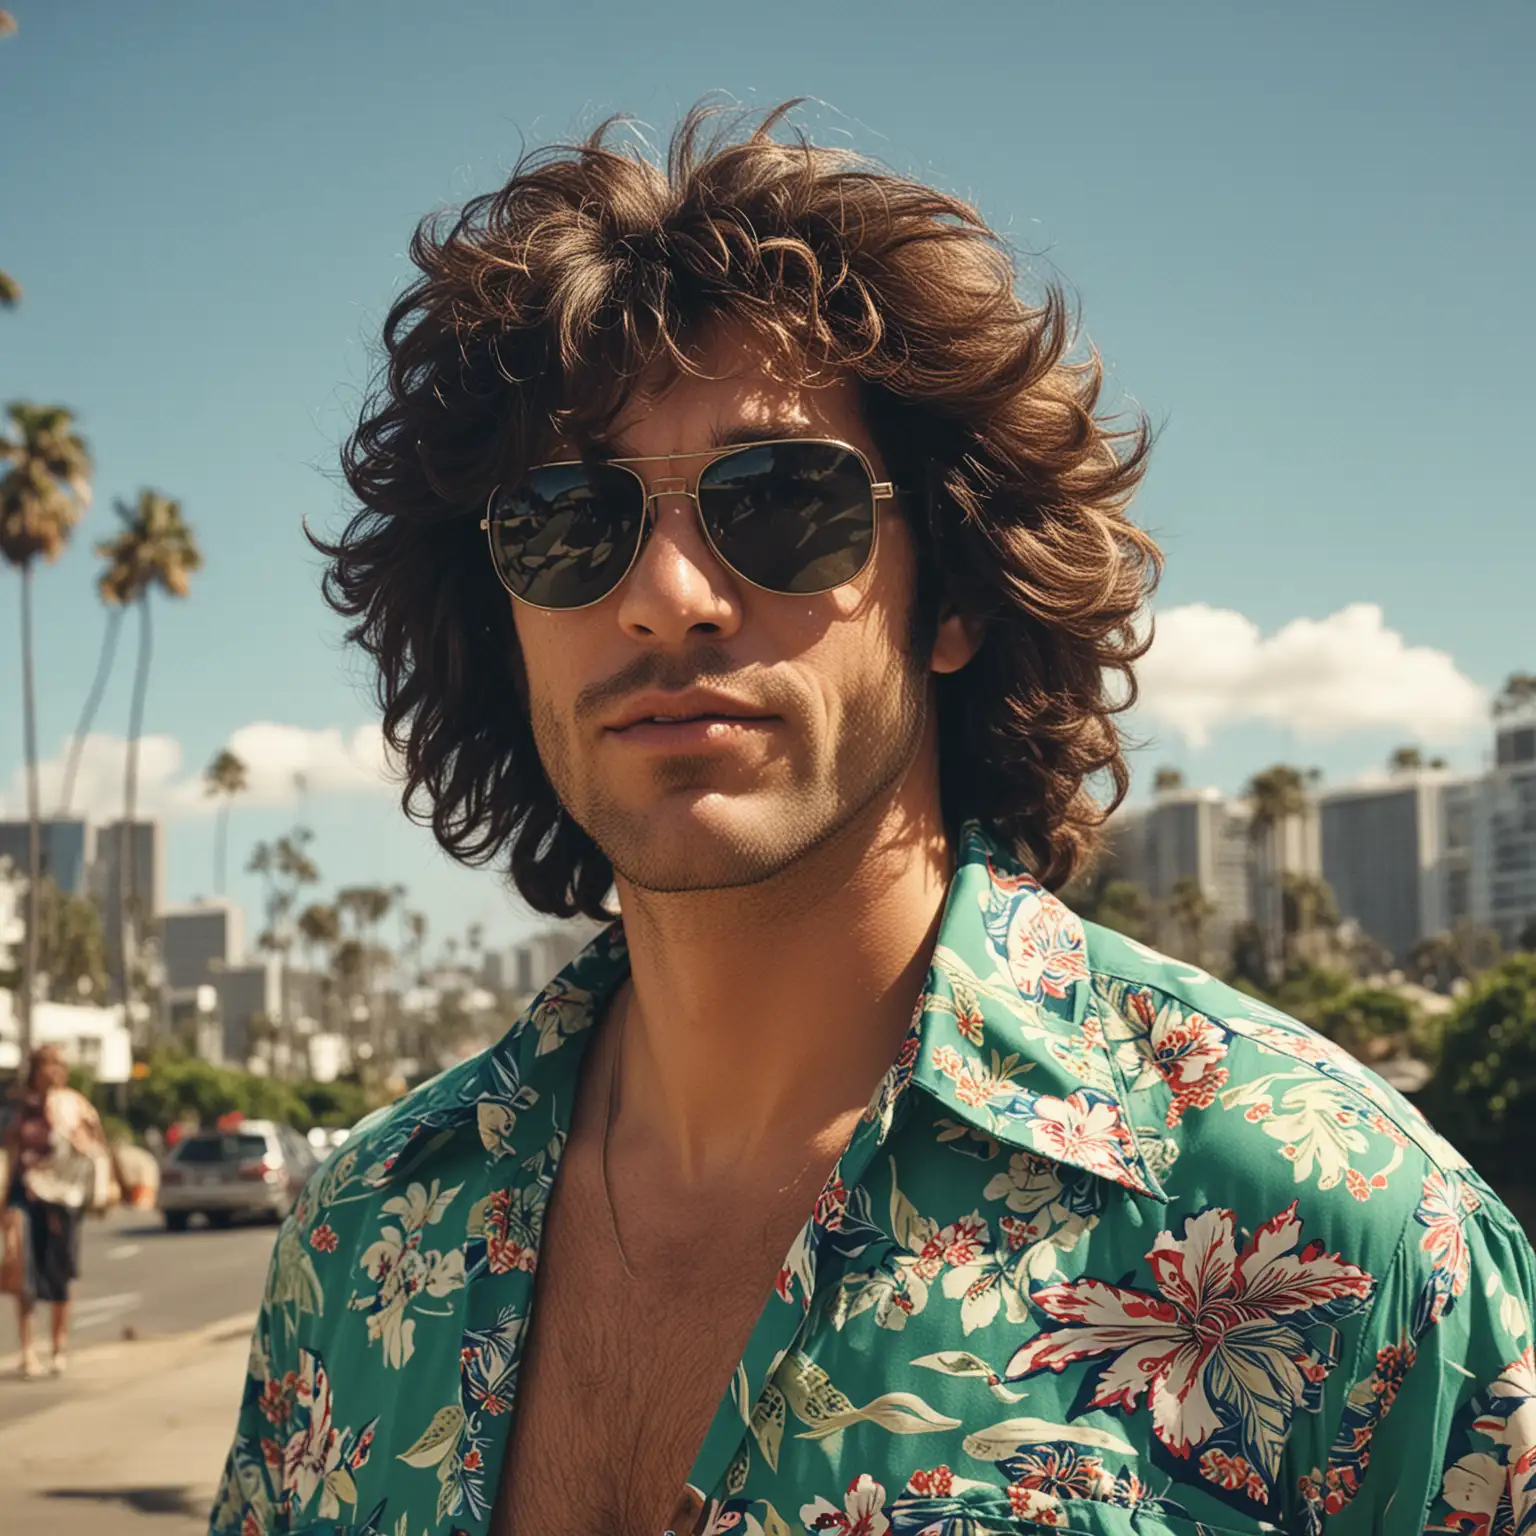 Retro Man with Thick Sunglasses and Hawaiian Shirt under Blue LA Skies